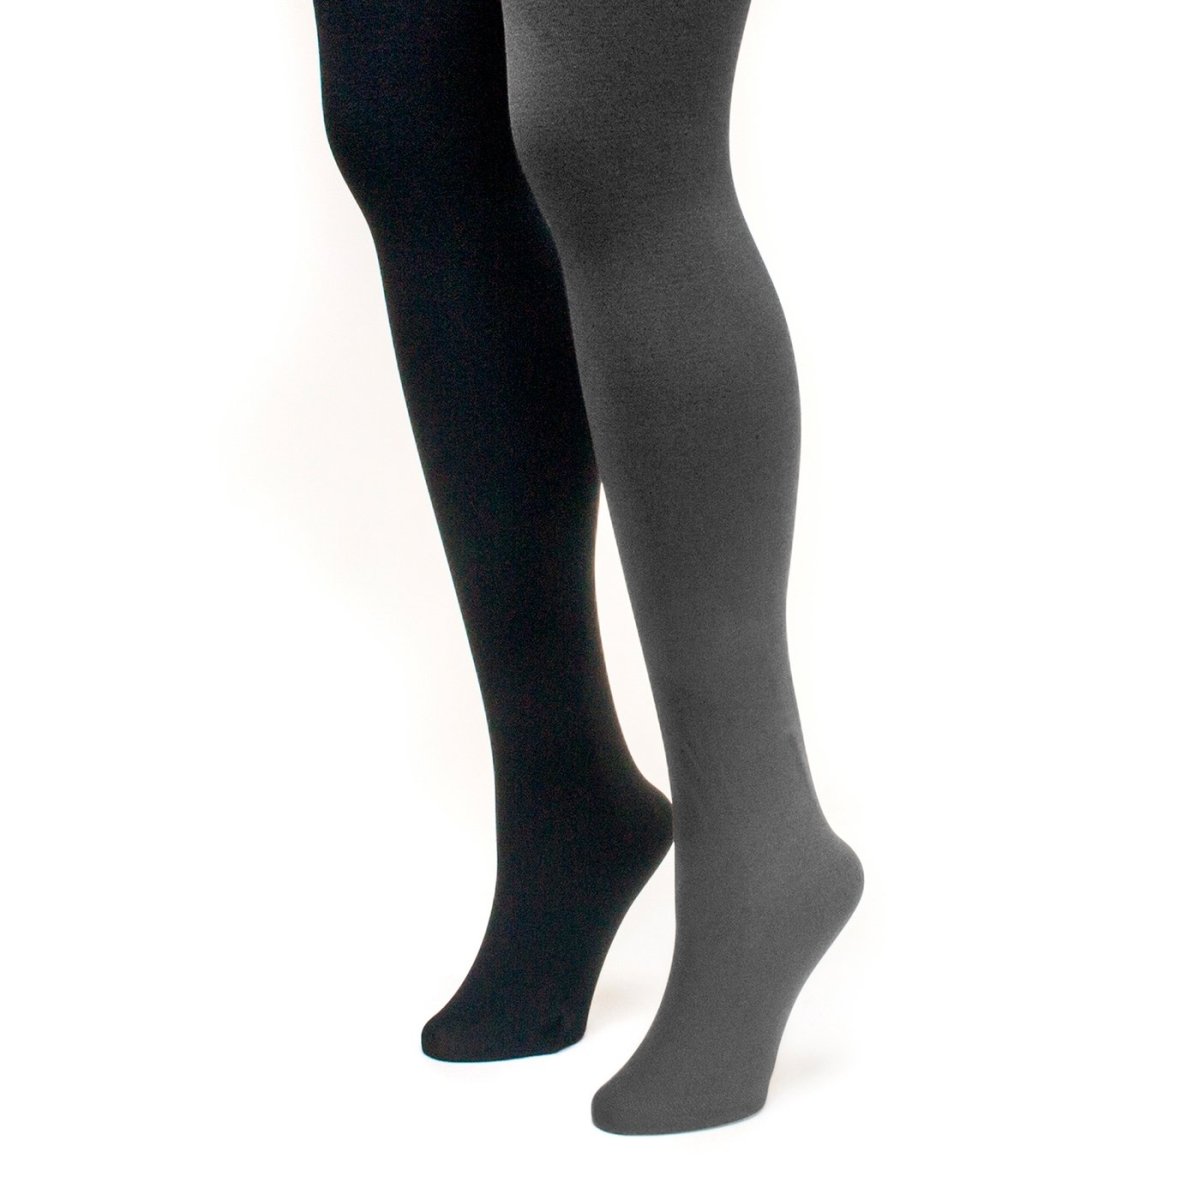 0023327999-s Womens Fleece Lined 2-pair Pack Tights, Black & Dark Grey - Small